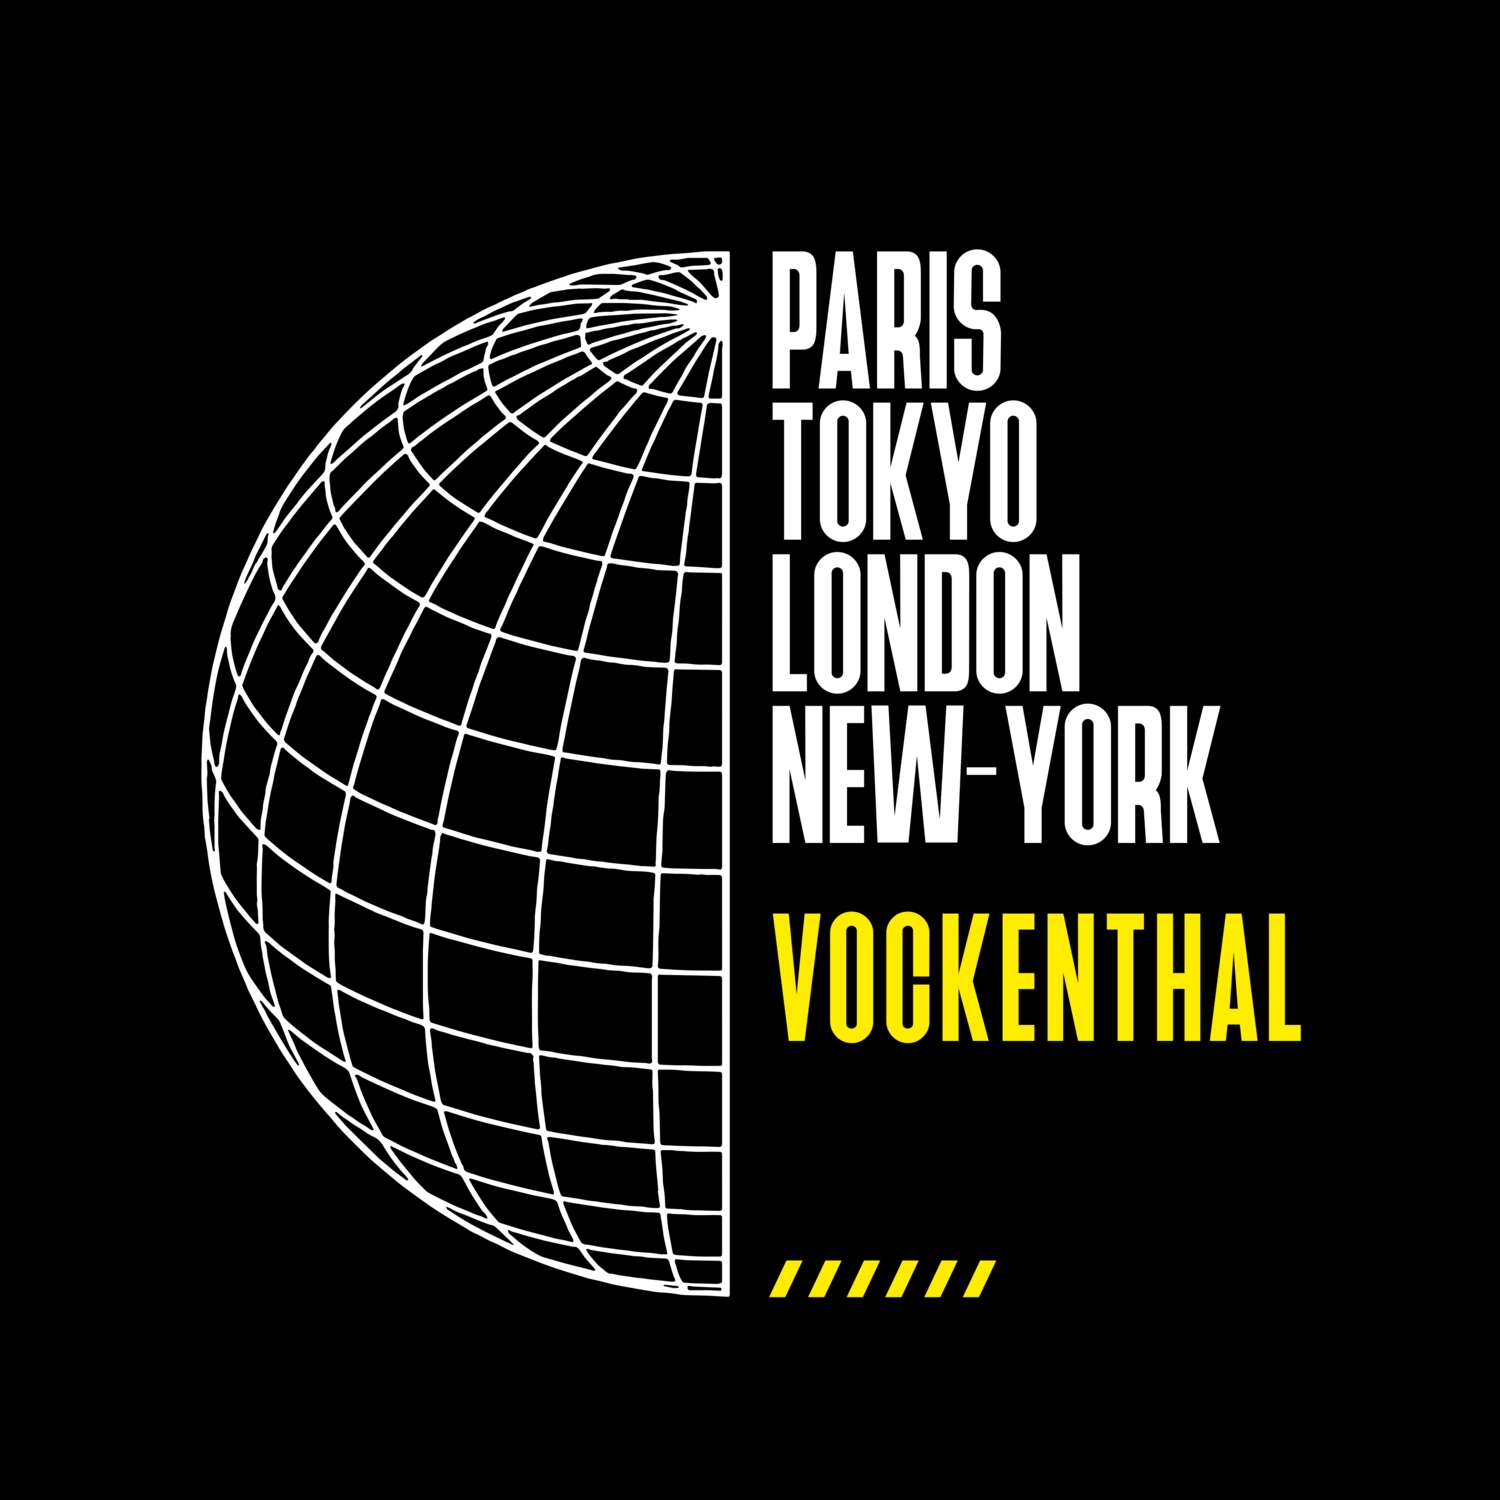 Vockenthal T-Shirt »Paris Tokyo London«